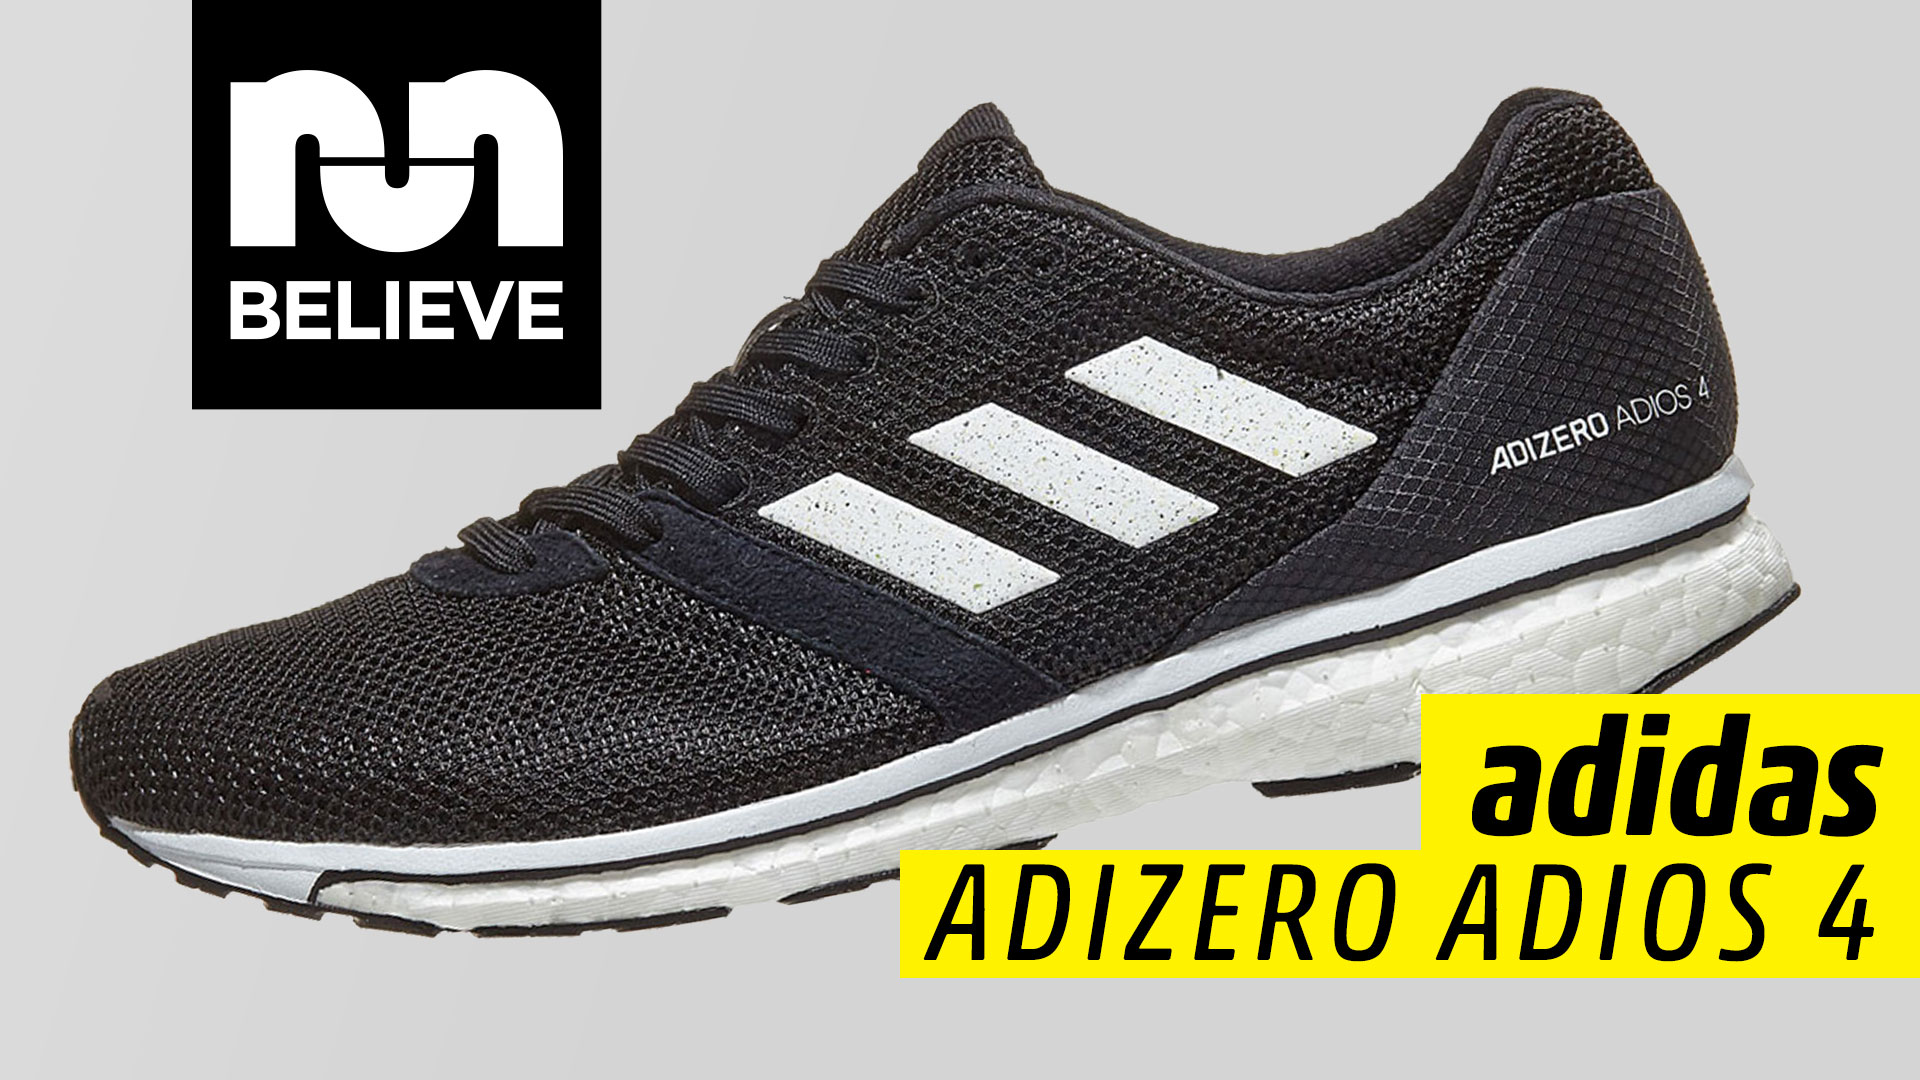 Adidas Adizero Adios 4 Video Review - Believe